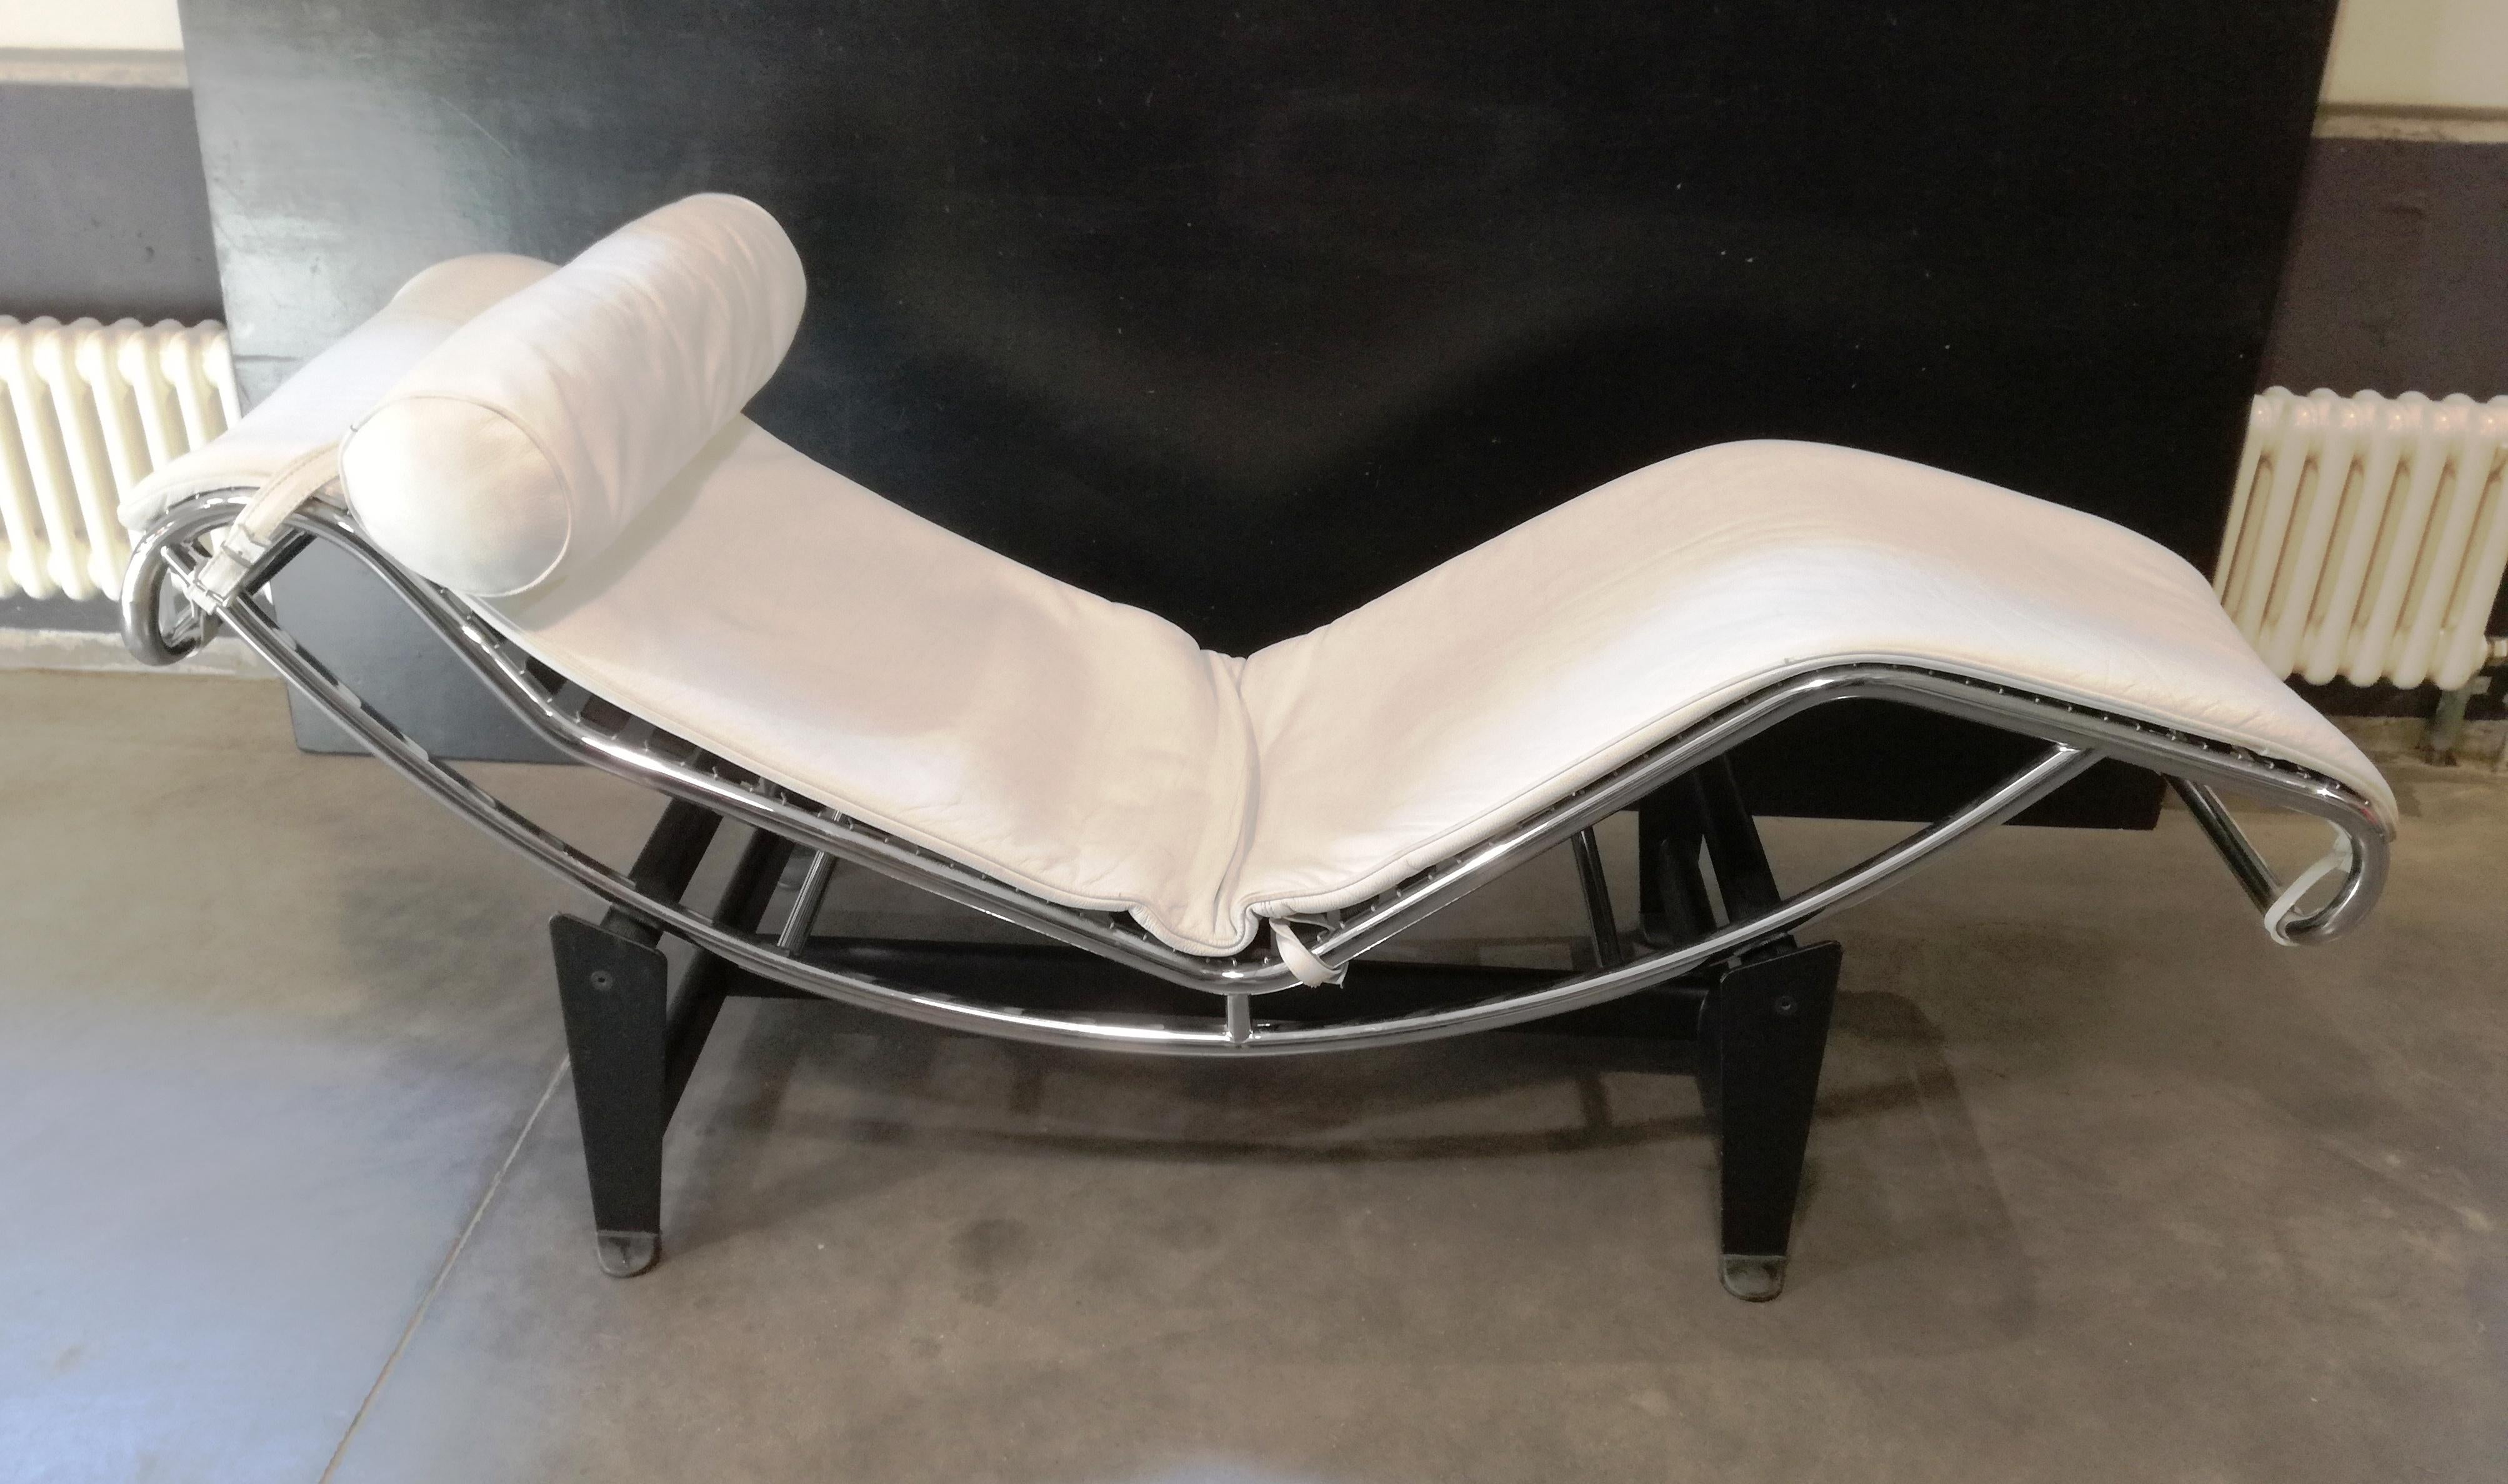 chaise loungue di ispirazione Bauhaus. basculante. produzione Alivar anni 90. usata ma bene conservata. vera pelle di qualita'.